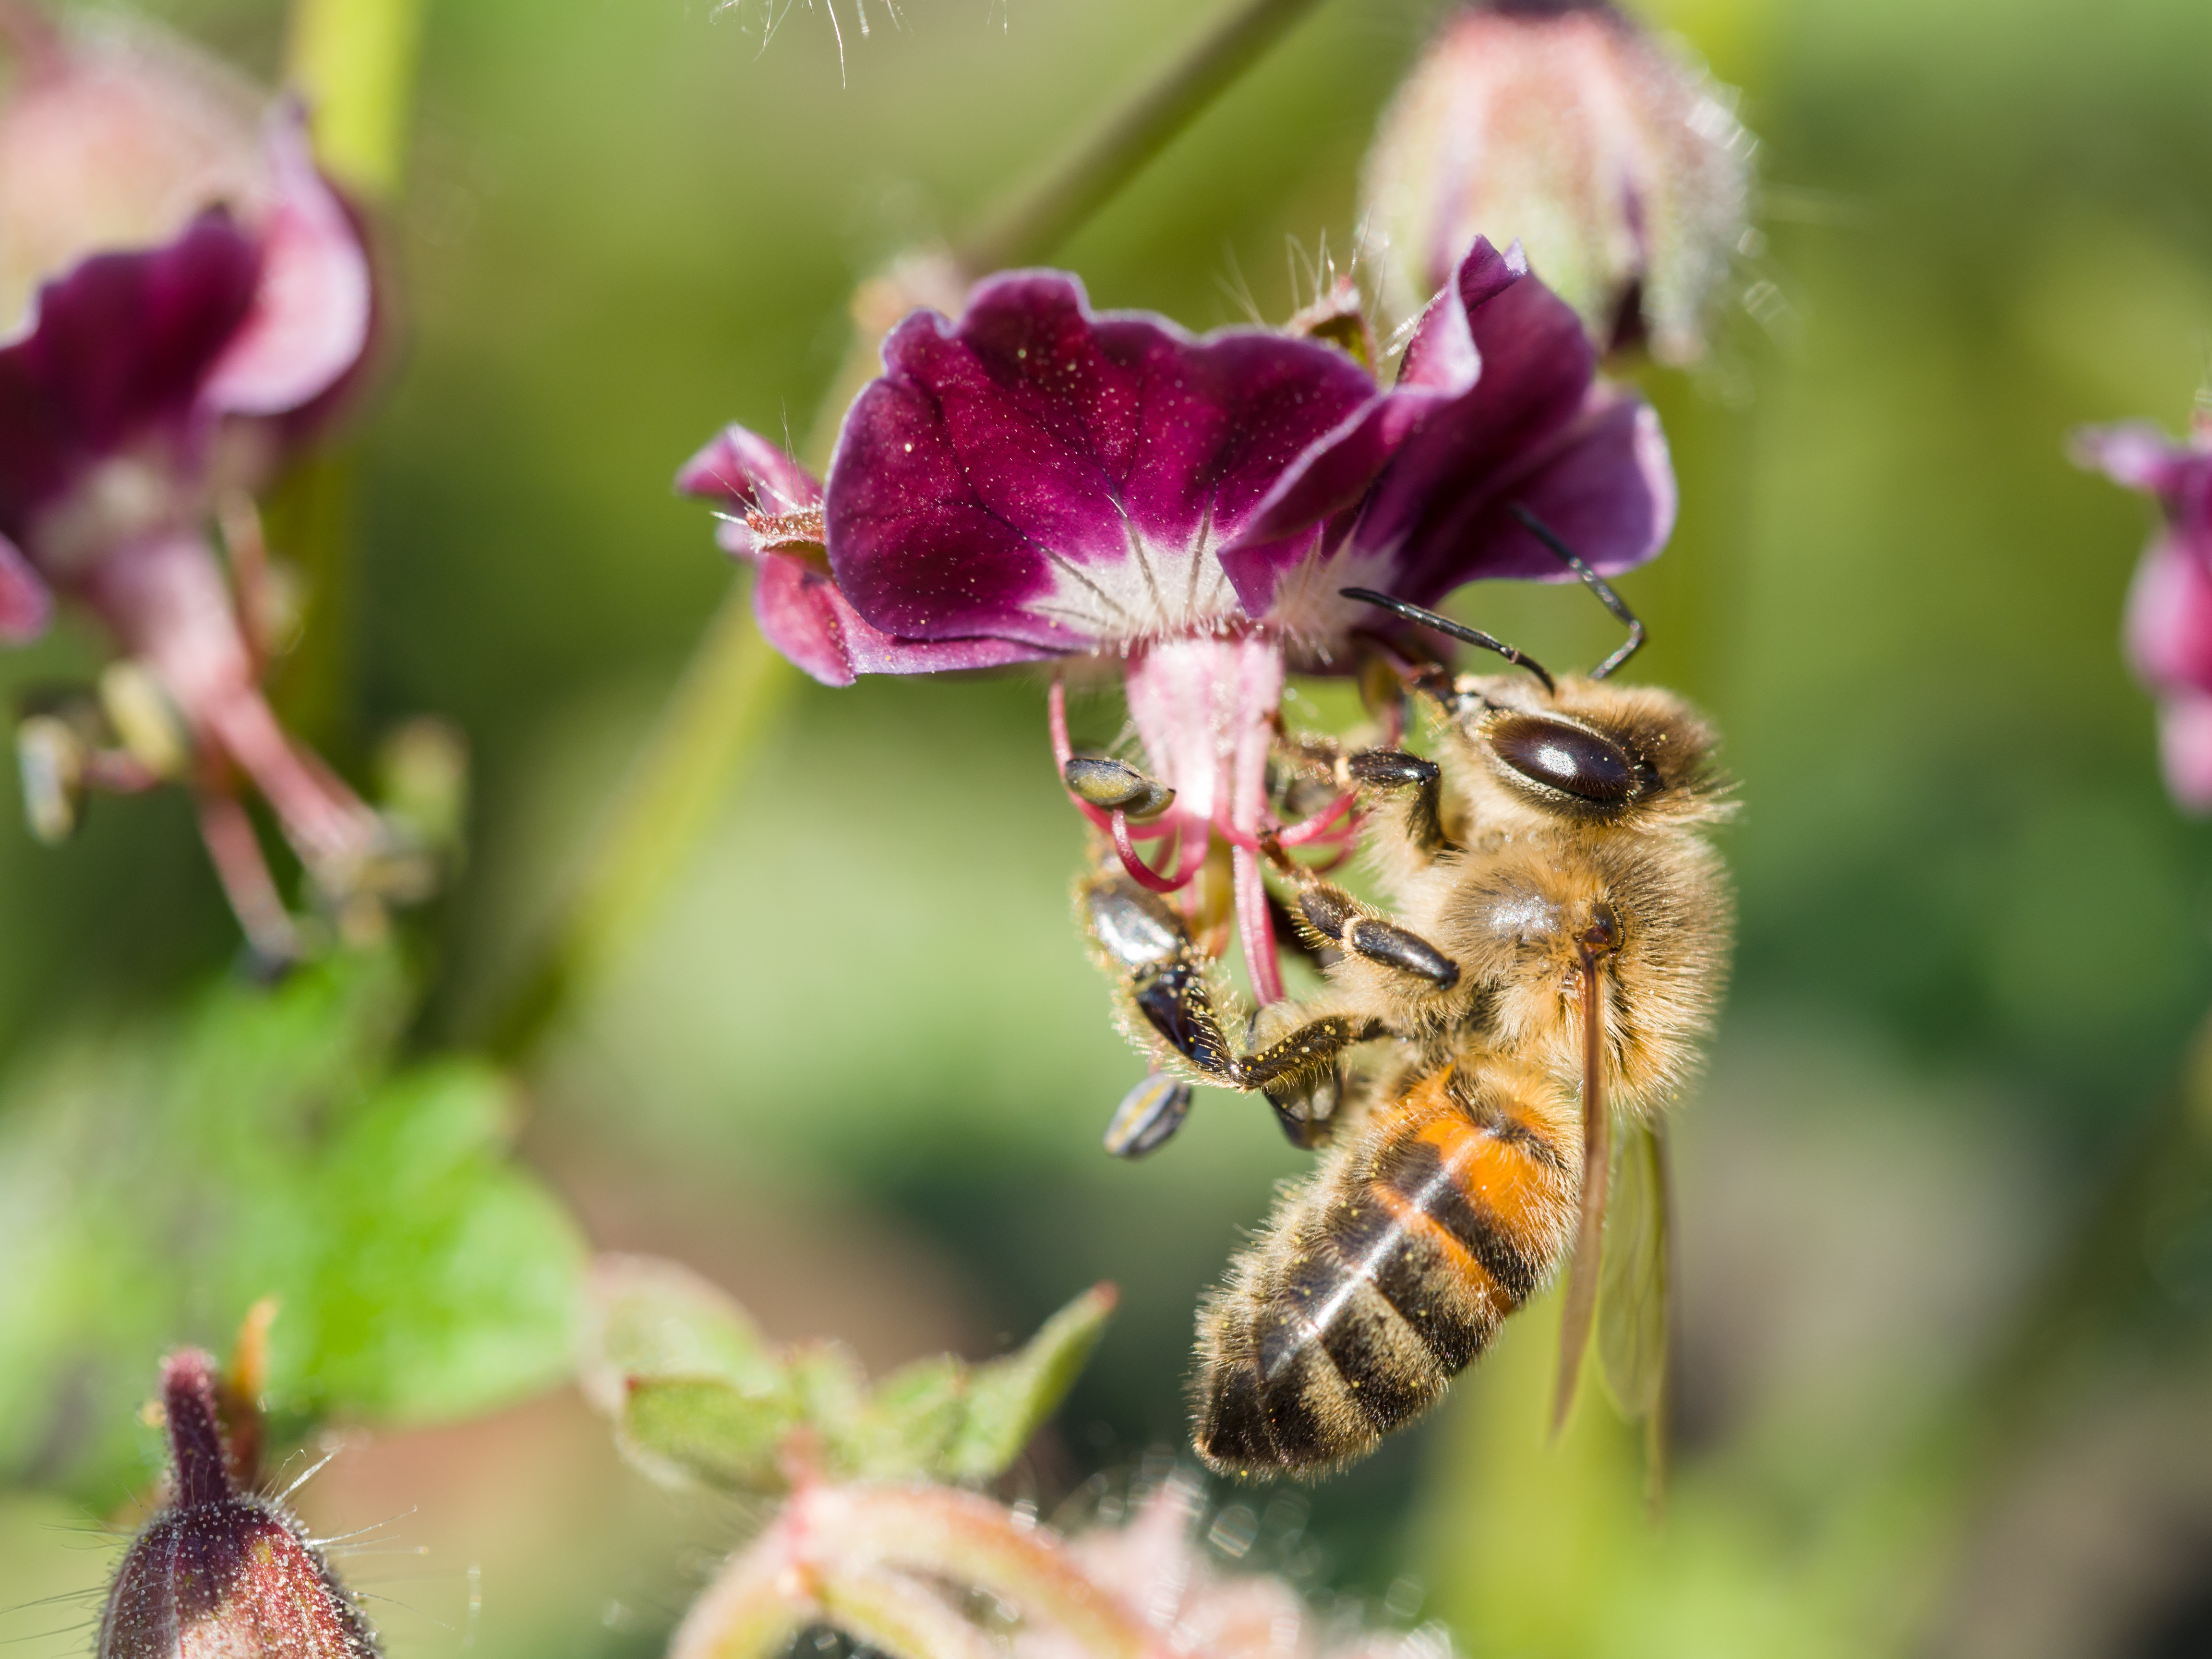 File:Bee gathering nectar.jpg - Wikimedia Commons